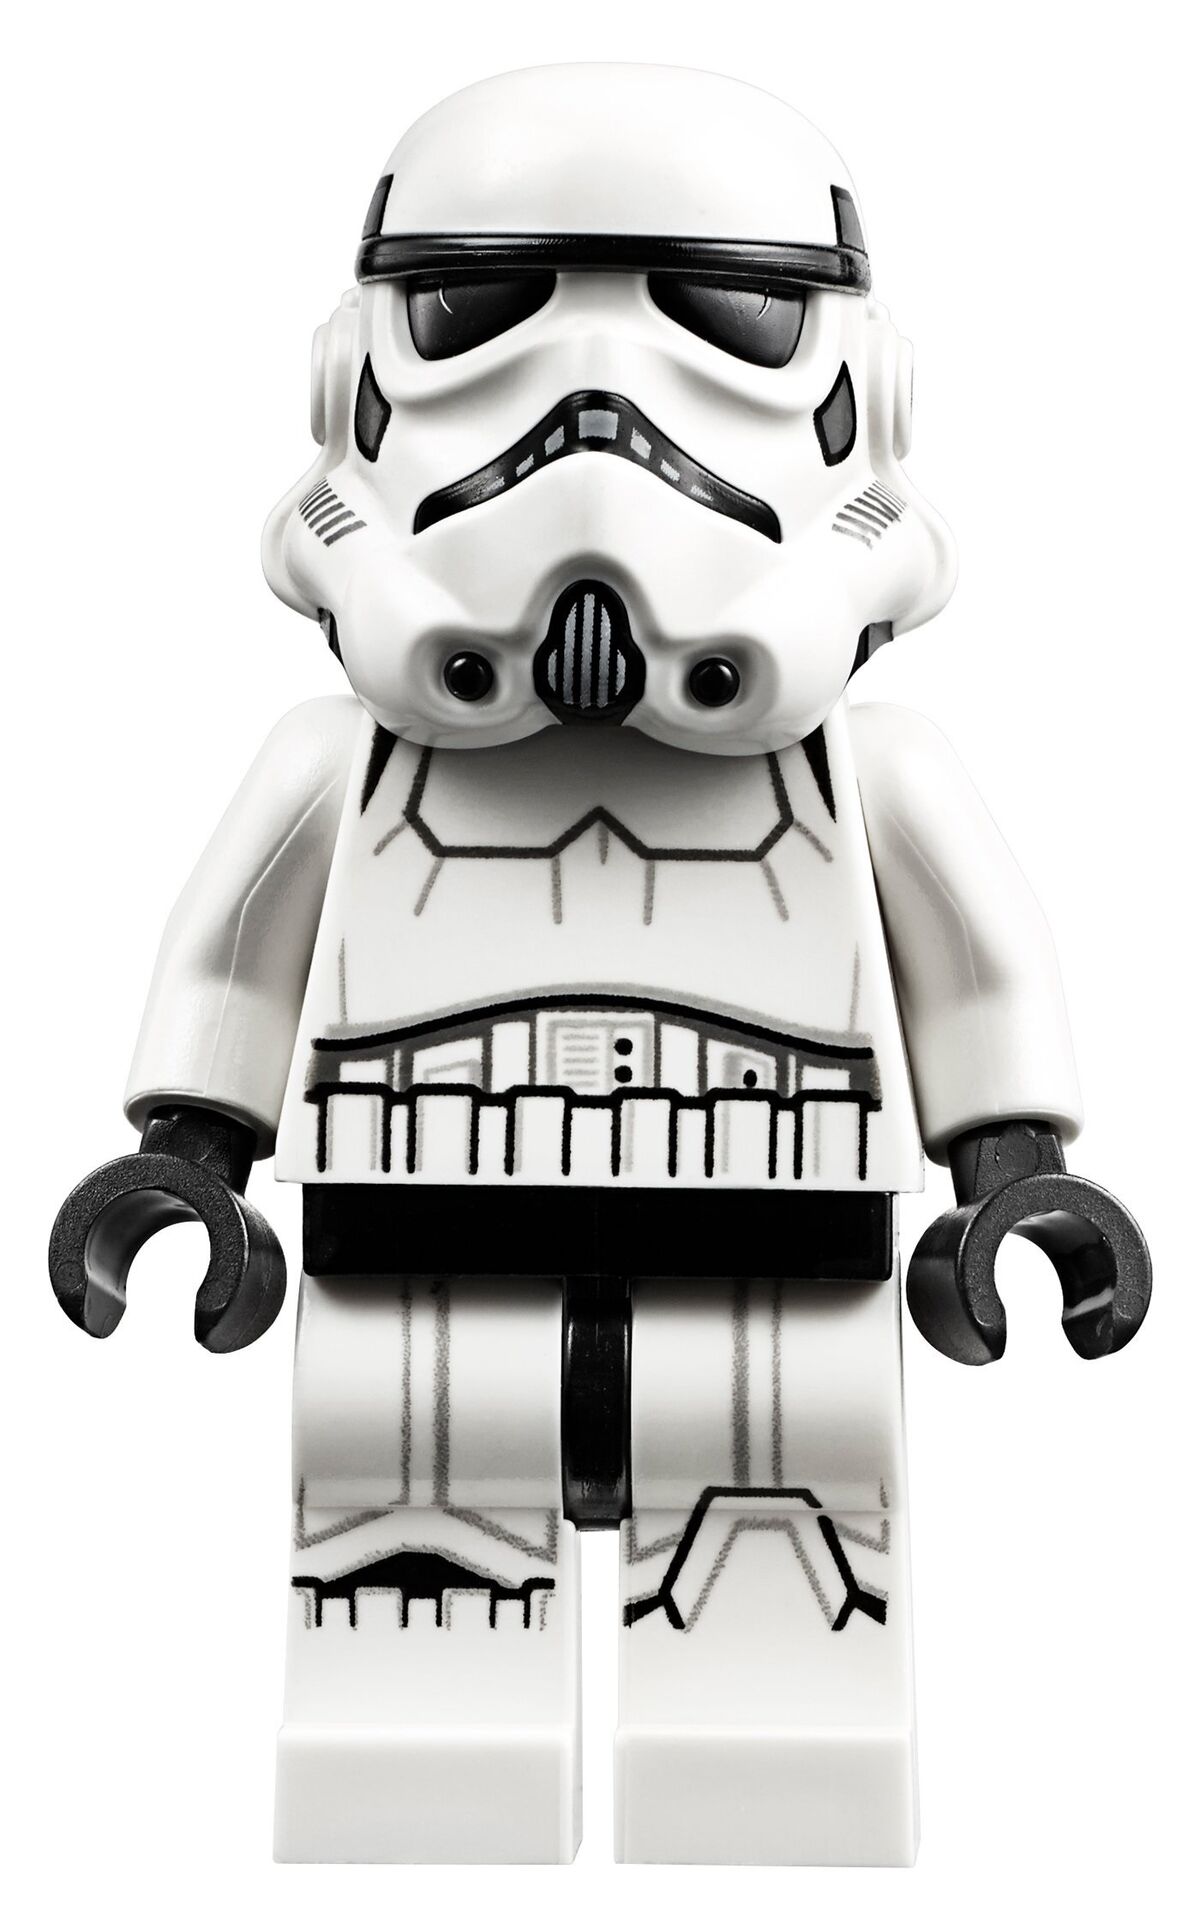 75055 Imperial Star Destroyer, Wiki LEGO